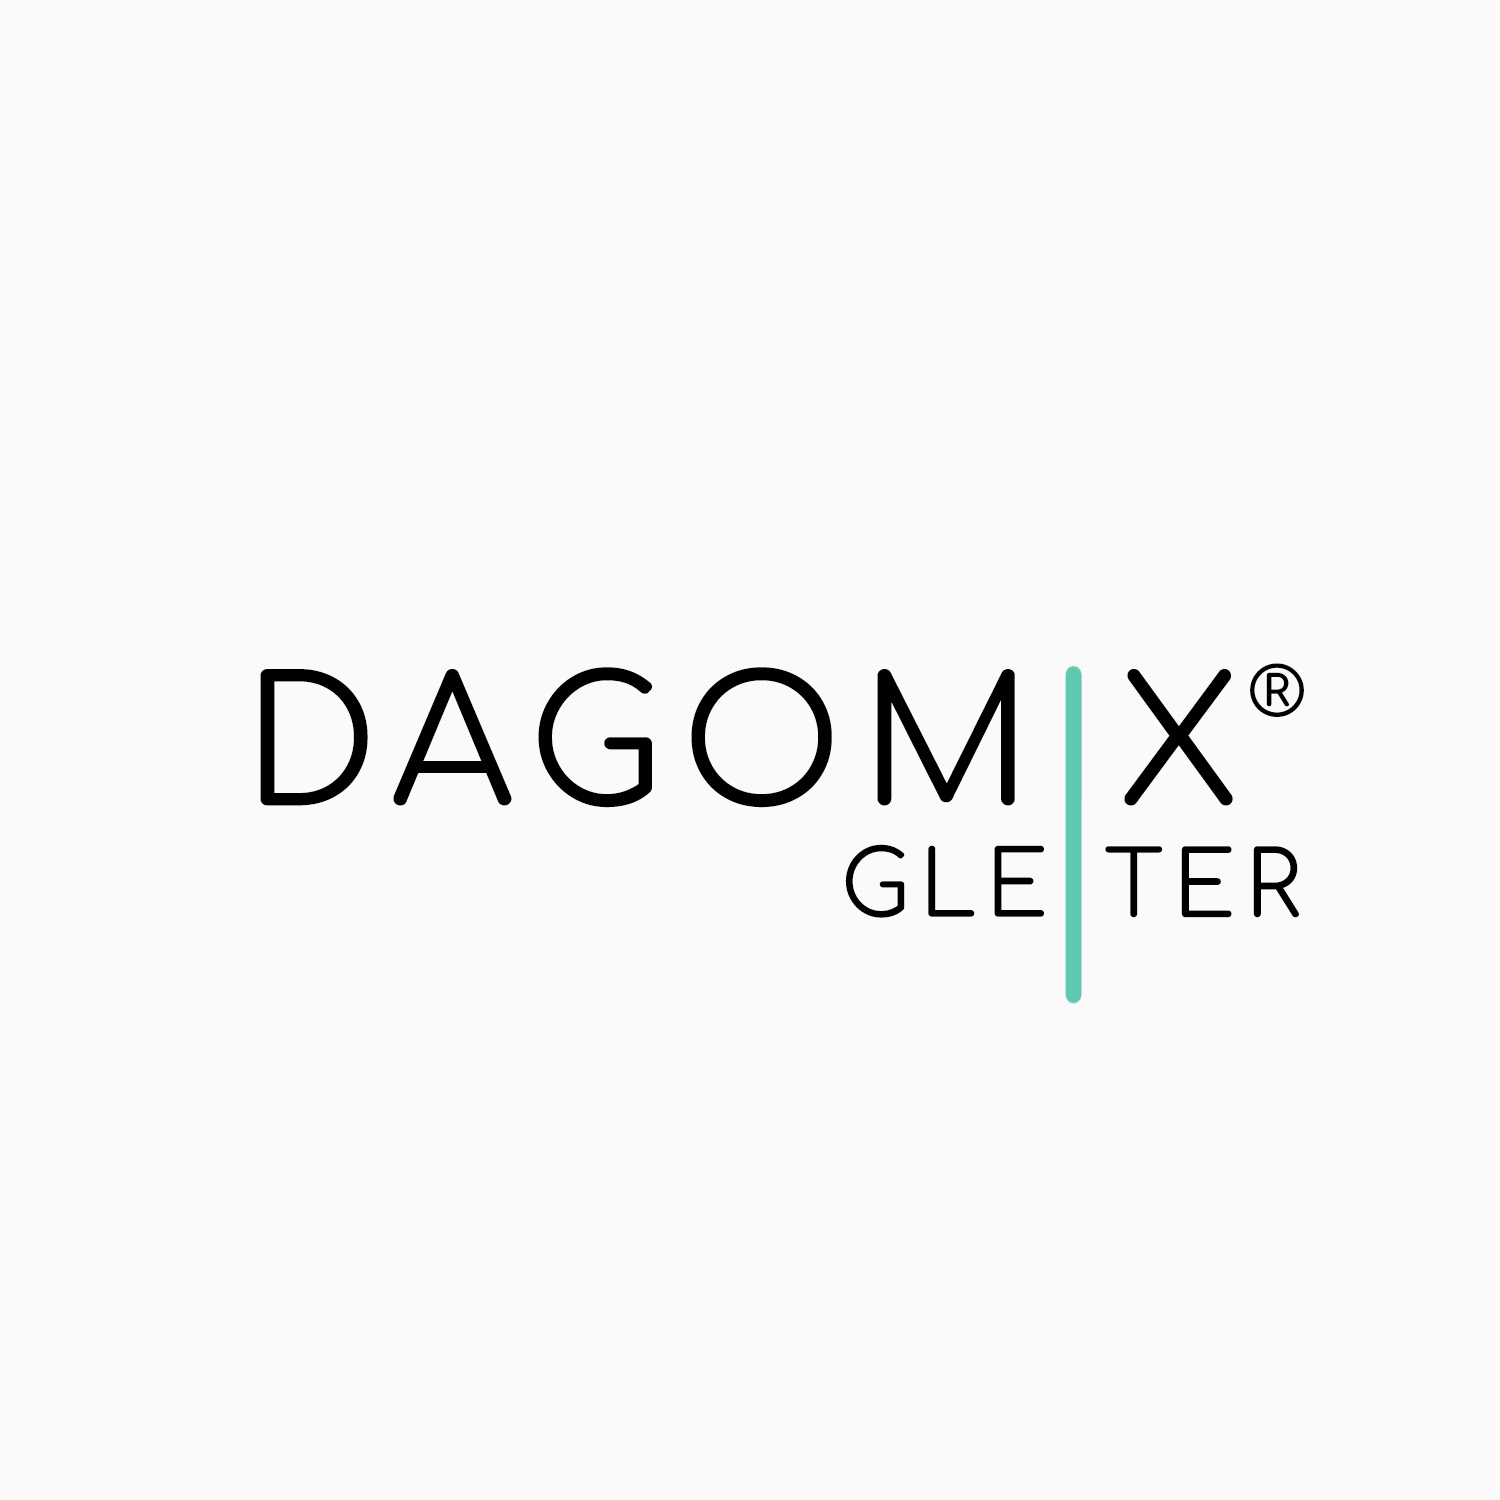 Dagomix